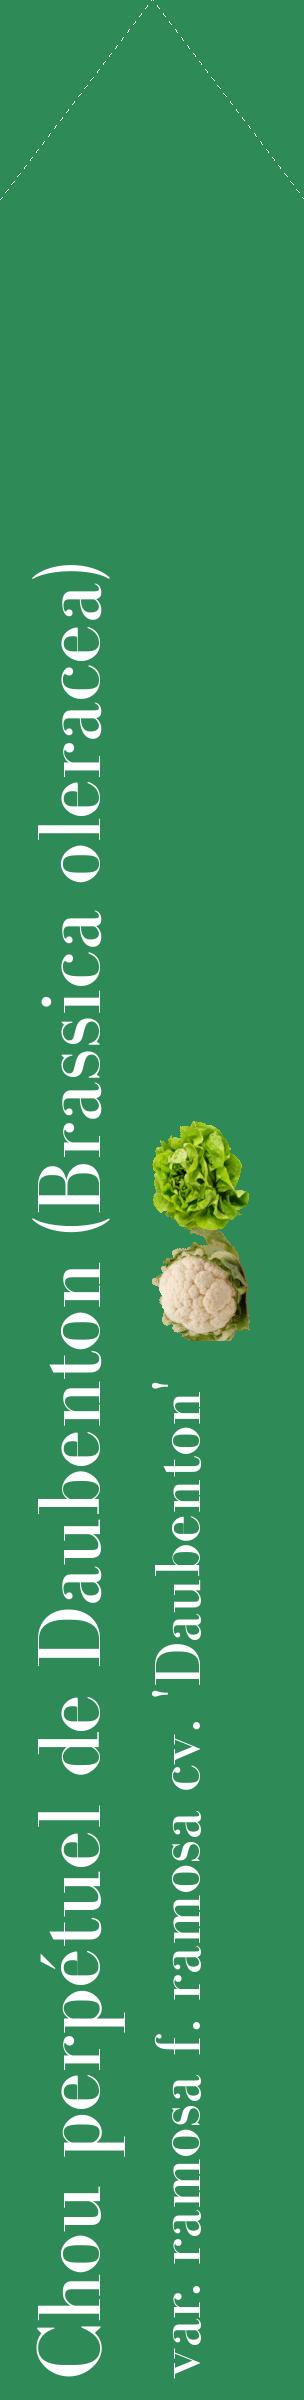 Étiquette de : Brassica oleracea var. ramosa f. ramosa cv. 'Daubenton' - format c - style blanche11_simplebod avec comestibilité simplifiée